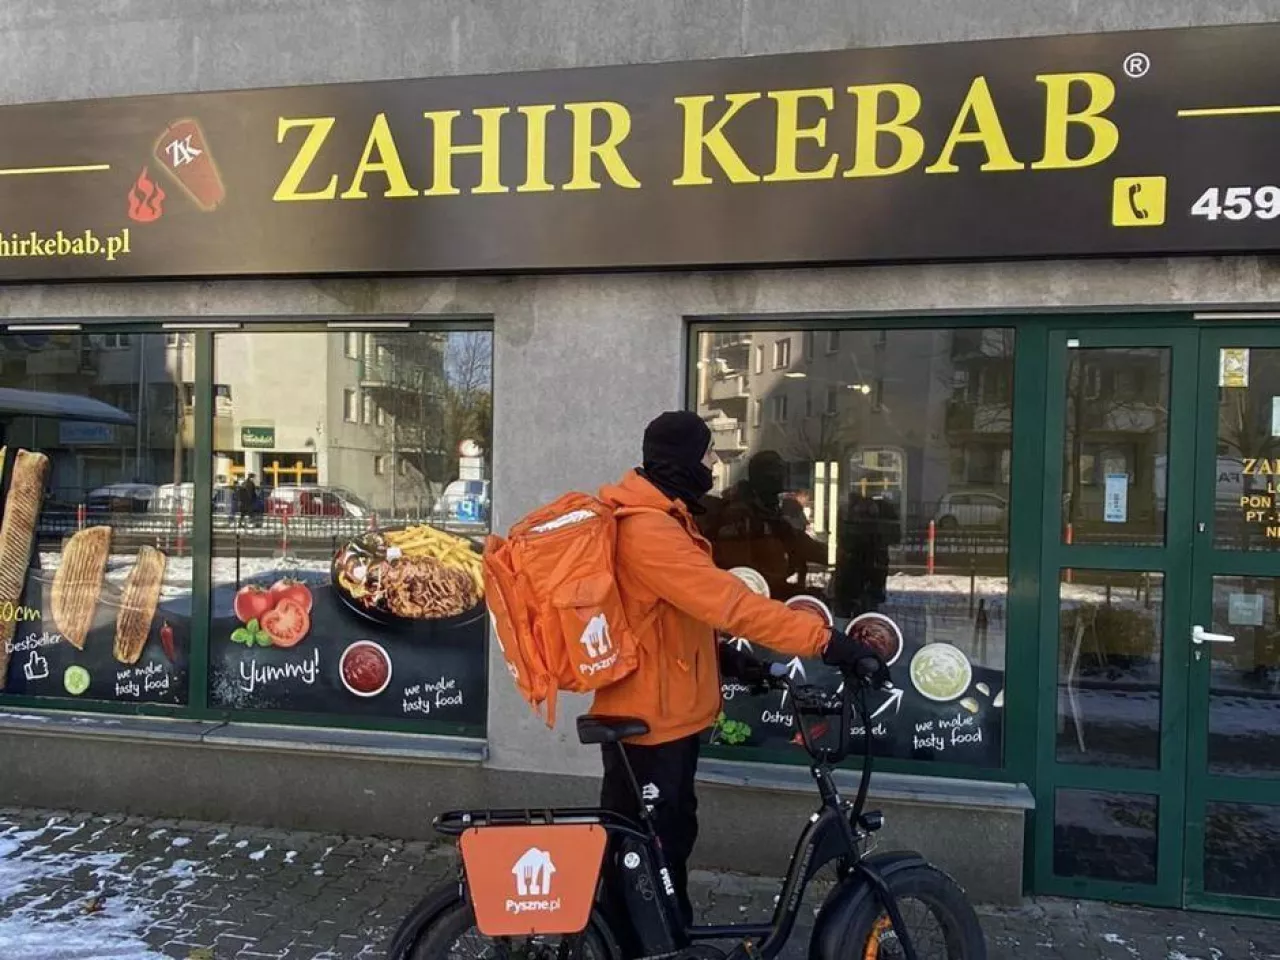 &lt;p&gt;Zahir Kebab podpisał umowę z Pyszne.pl&lt;/p&gt;